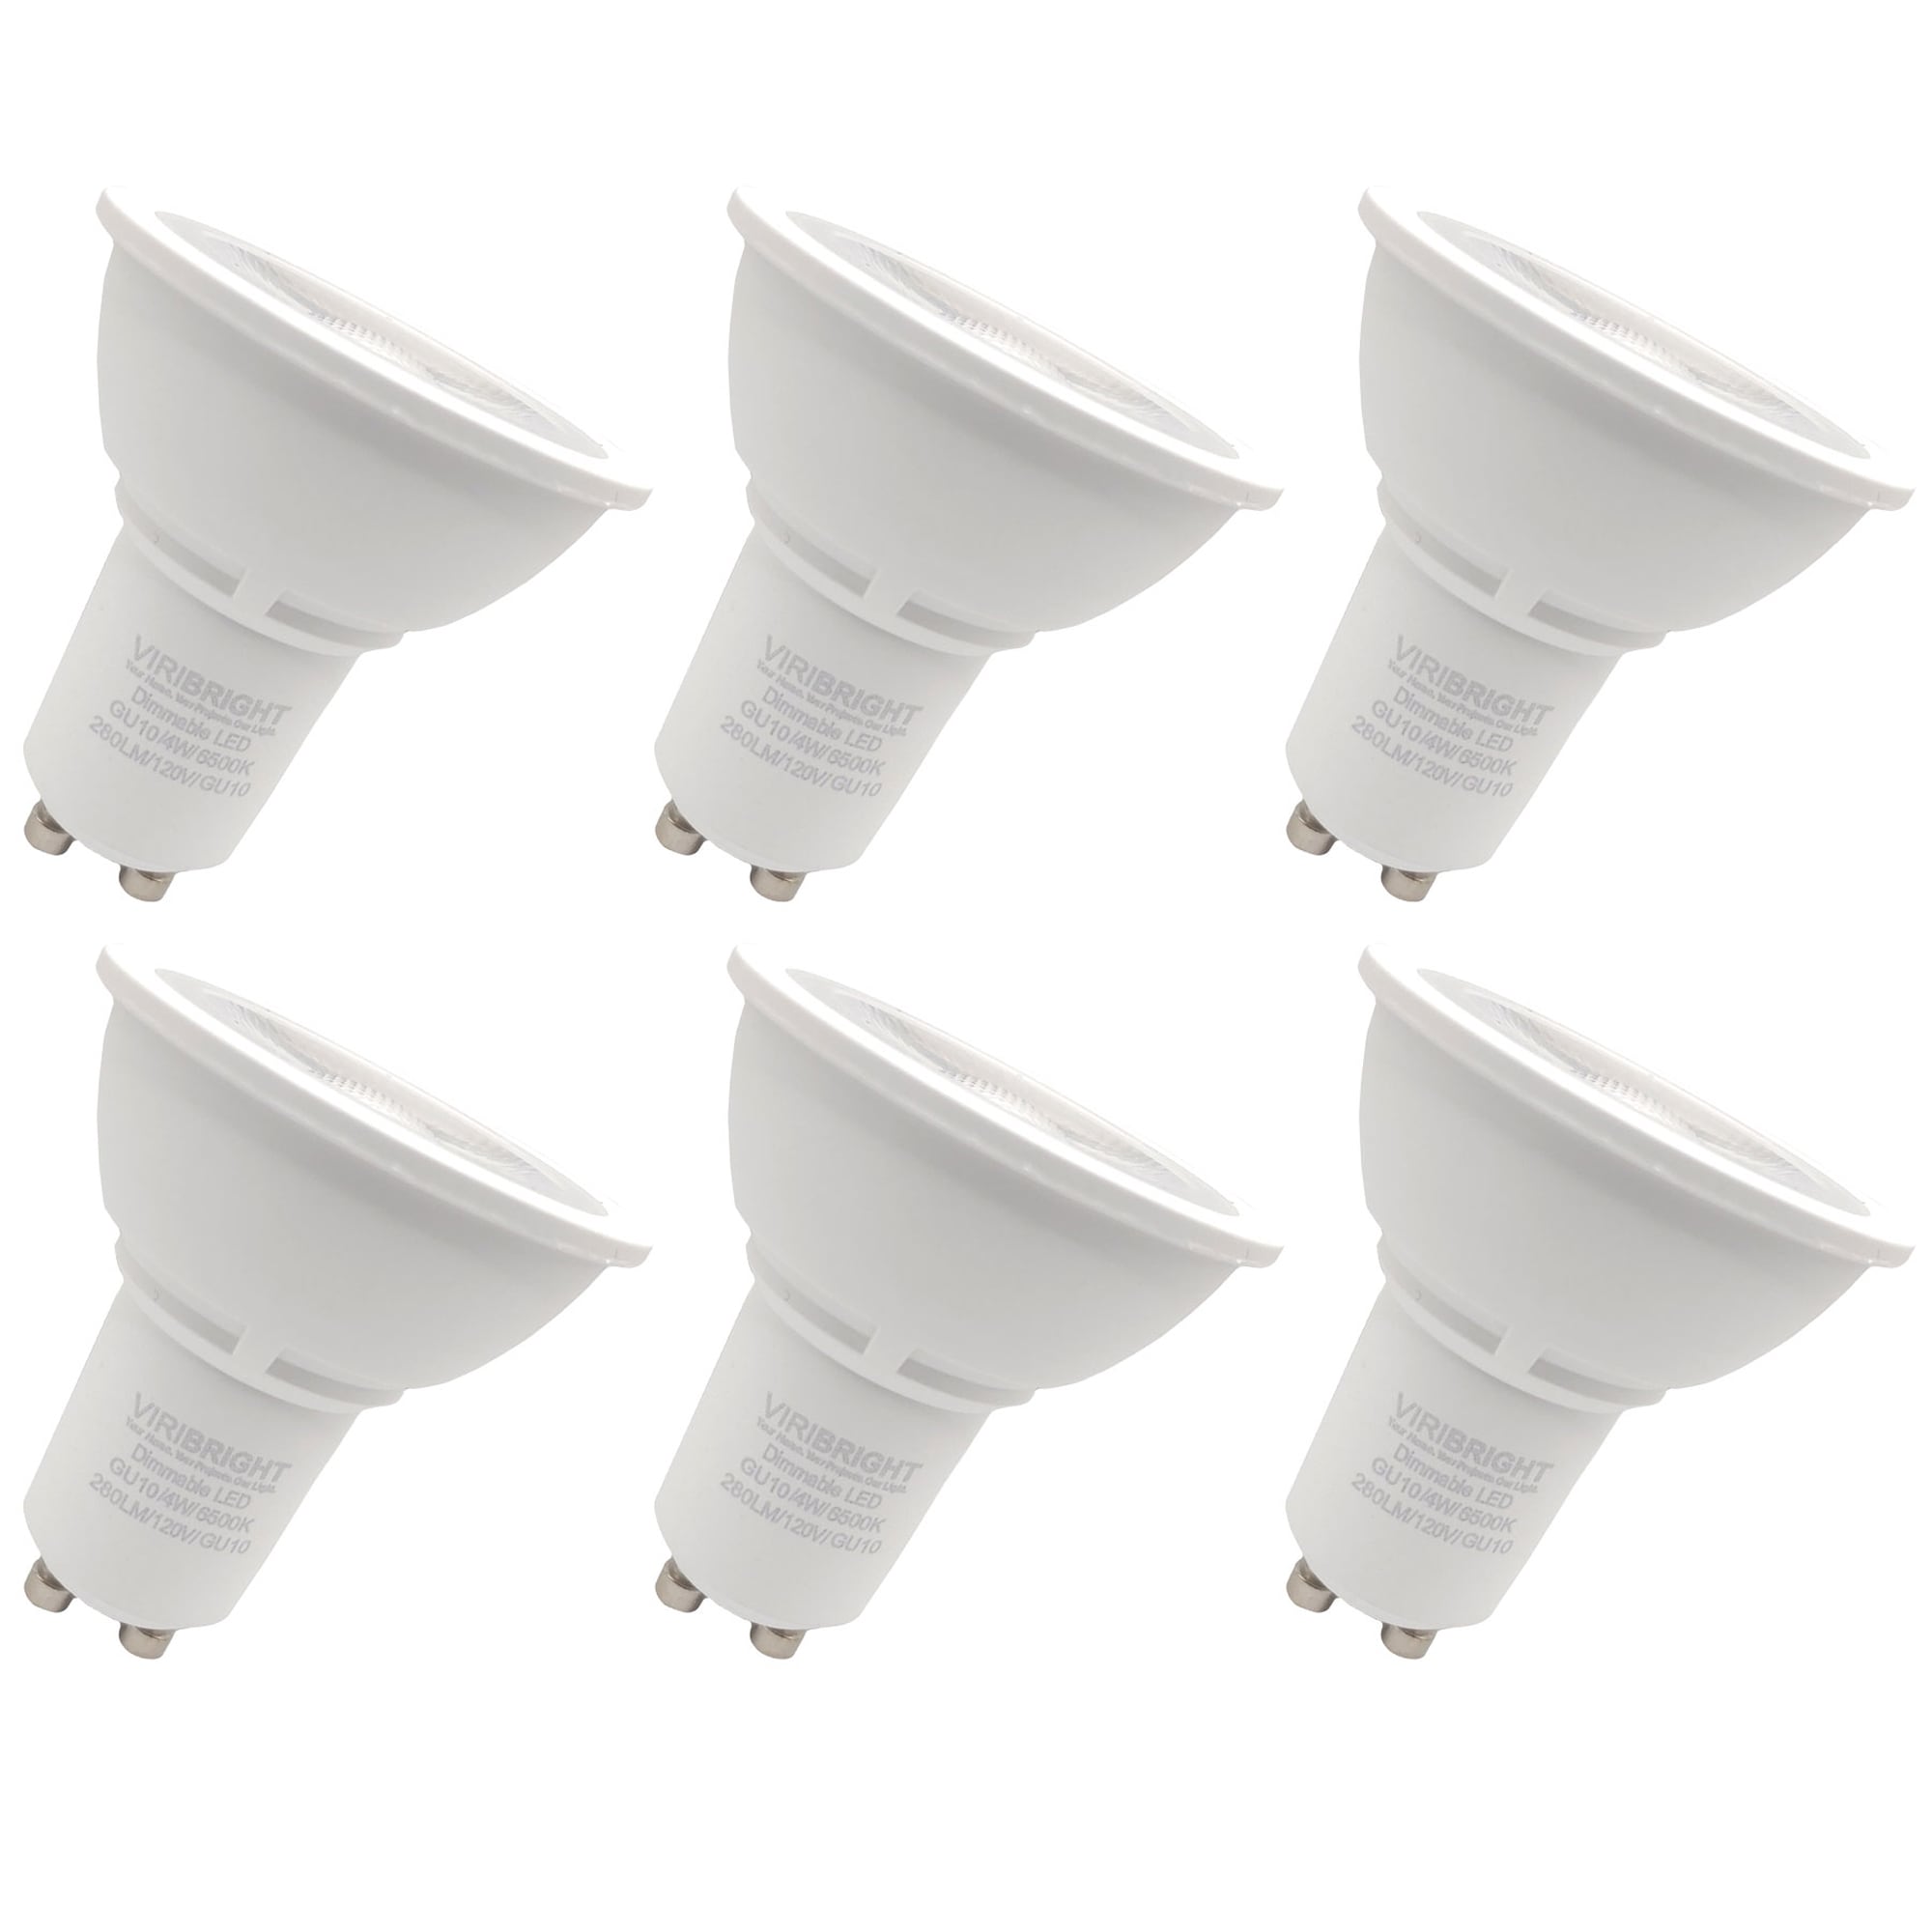 ETUOLMP GU10 Halogen Light Bulbs 2 Pin, 6 Pack GU10 Bulb Warm White,  Dimmable GU10+C 120V 50W Bulb for Wax Warmer Bulbs, Track Light Bulbs,  Range Hood